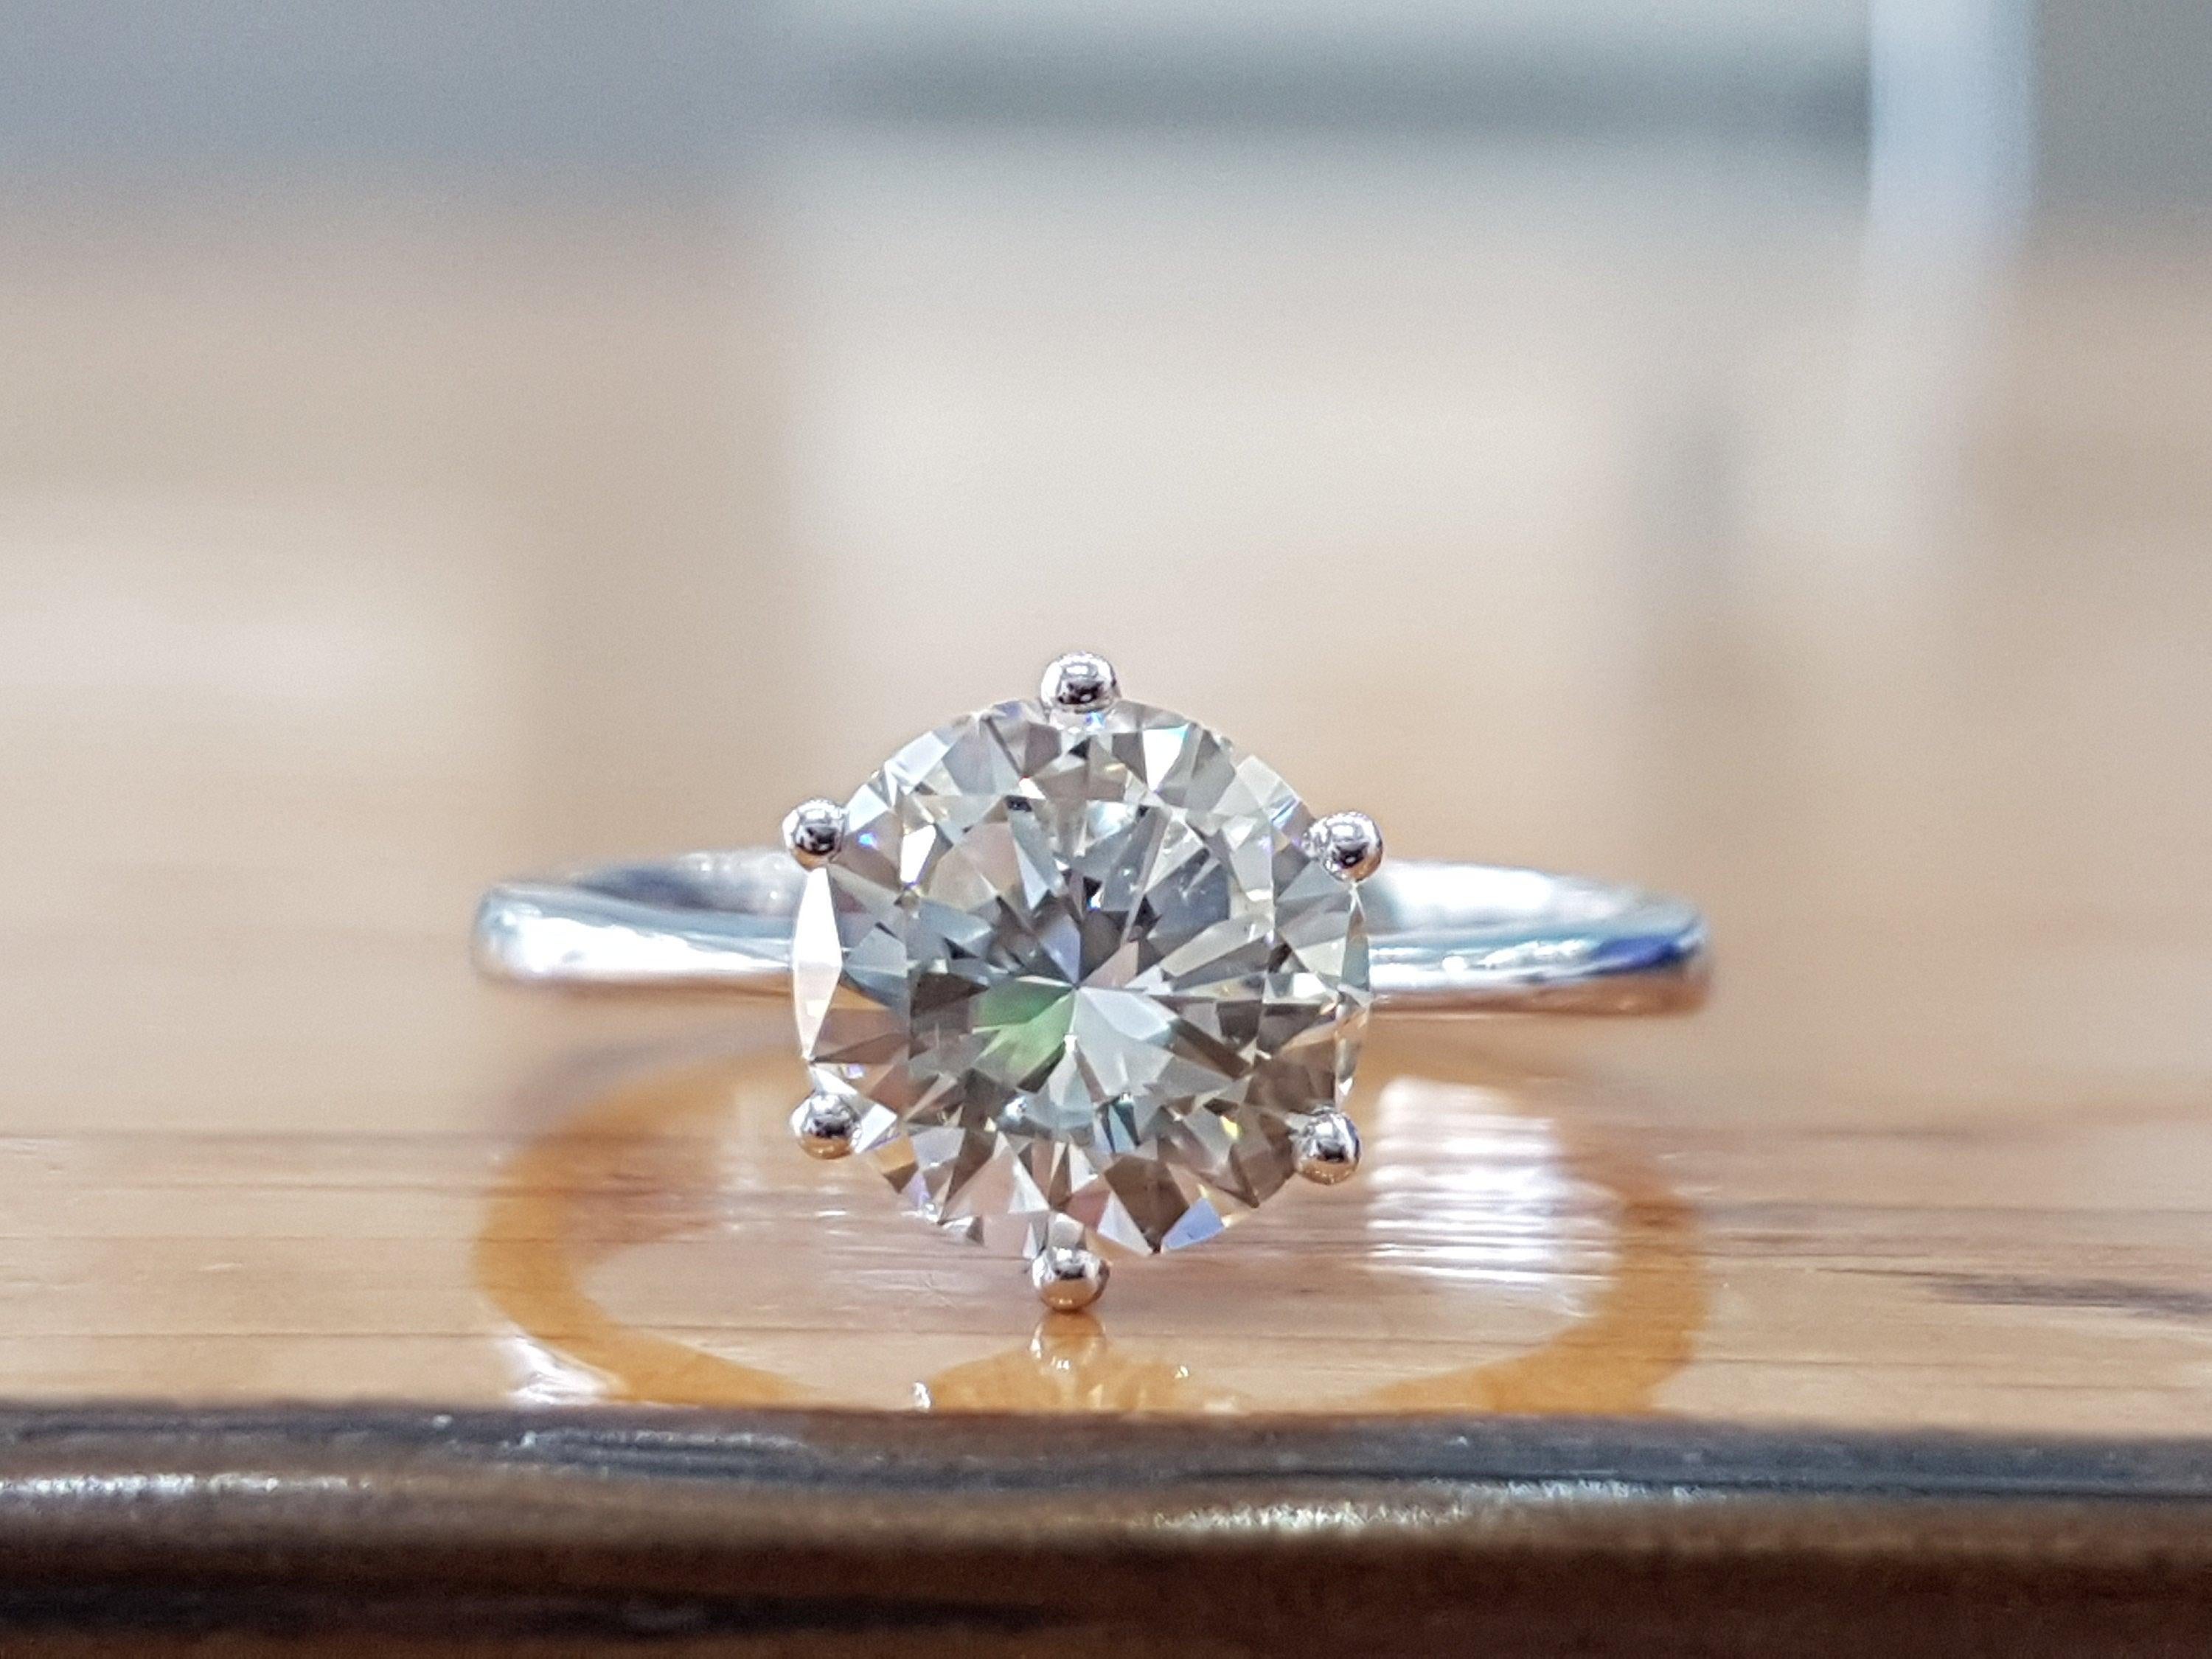 1 1/3 Carat H VVS Diamond Engagement Ring, Solitaire Diamond Ring, H VVS 1.36 Carat Diamond Ring, Round Diamond Promise Ring
 
 Main Stone Name: Natural Certified Diamond
 Main Stone Weight: 1.36 ct.
 Main Stone Clarity: VVS2
 Main Stone Color: H
